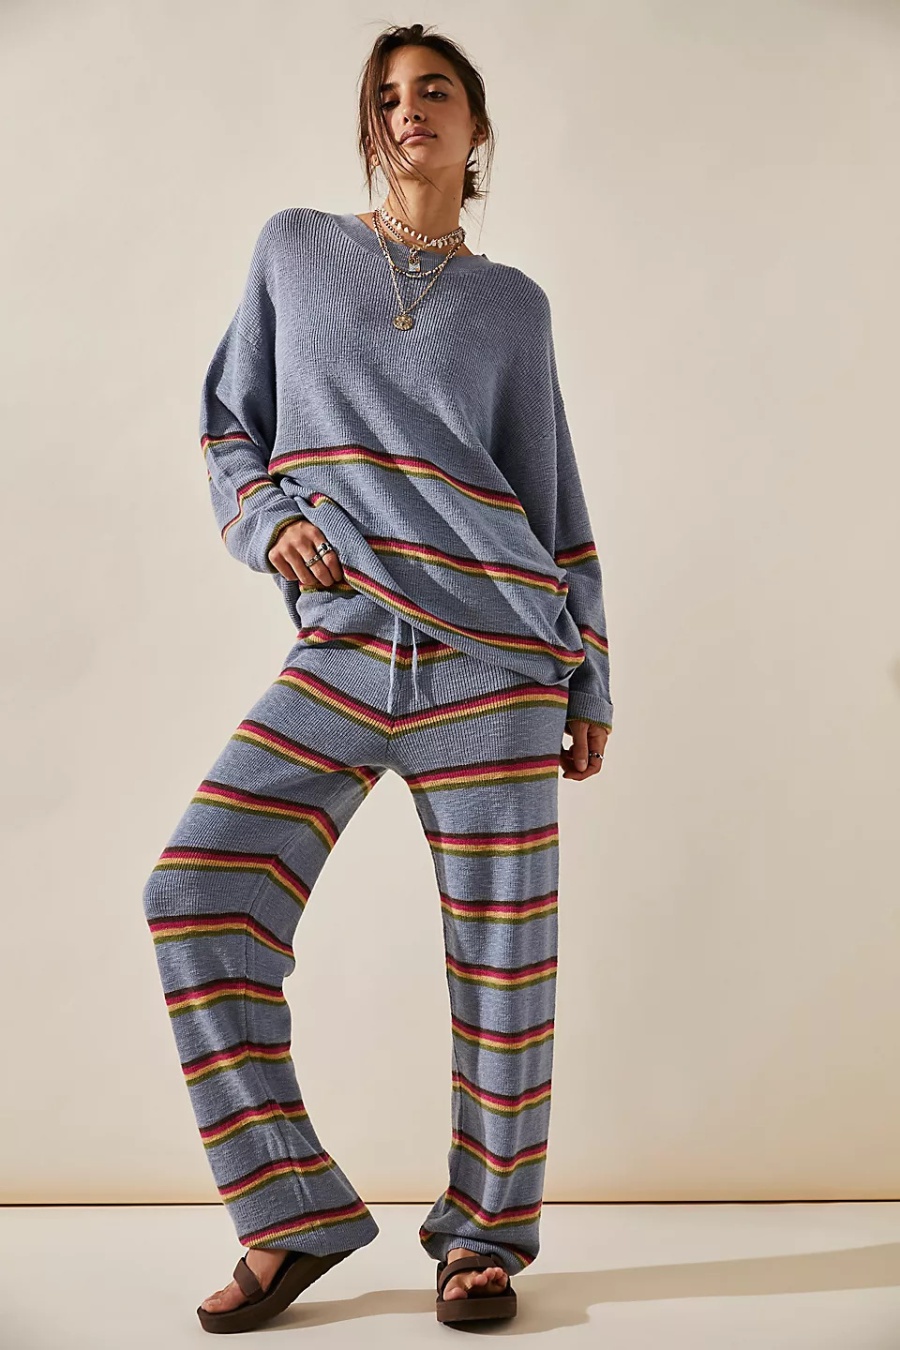 Loose sweater round neck long pants 2pcs set for women